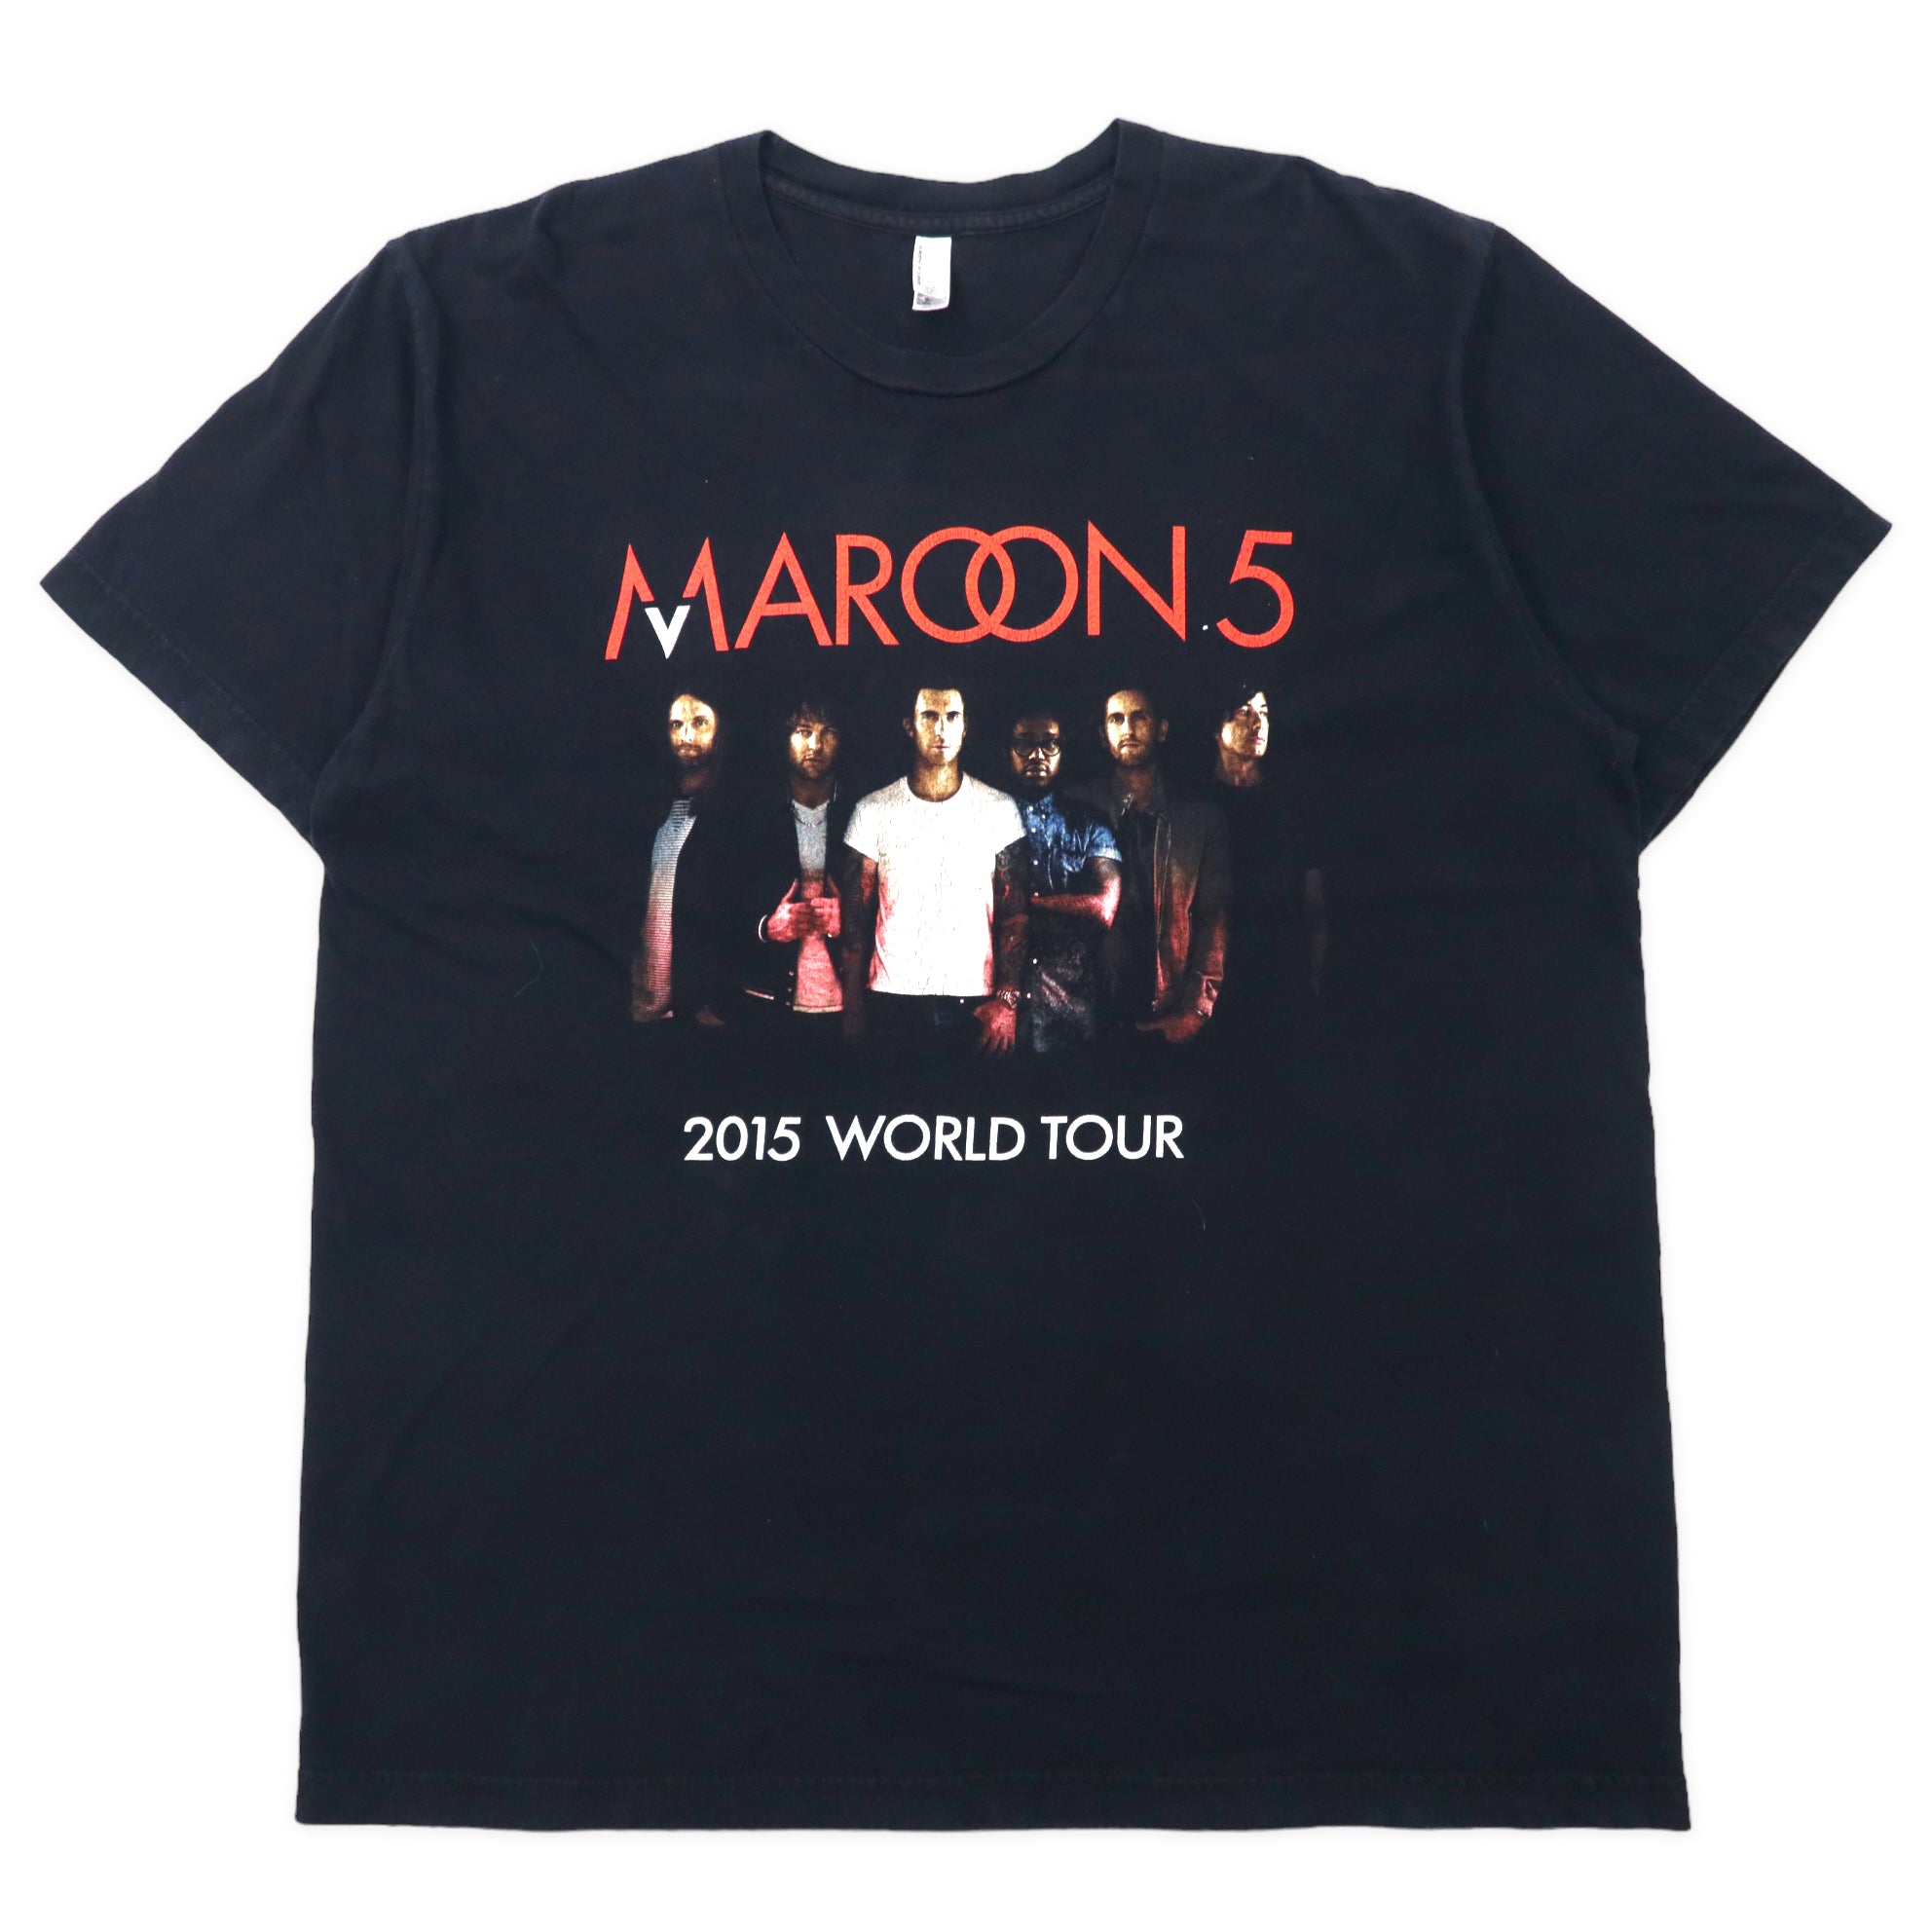 USA MADE MAROON5 Maroon 5 Band T-Shirt XL Black Cotton American